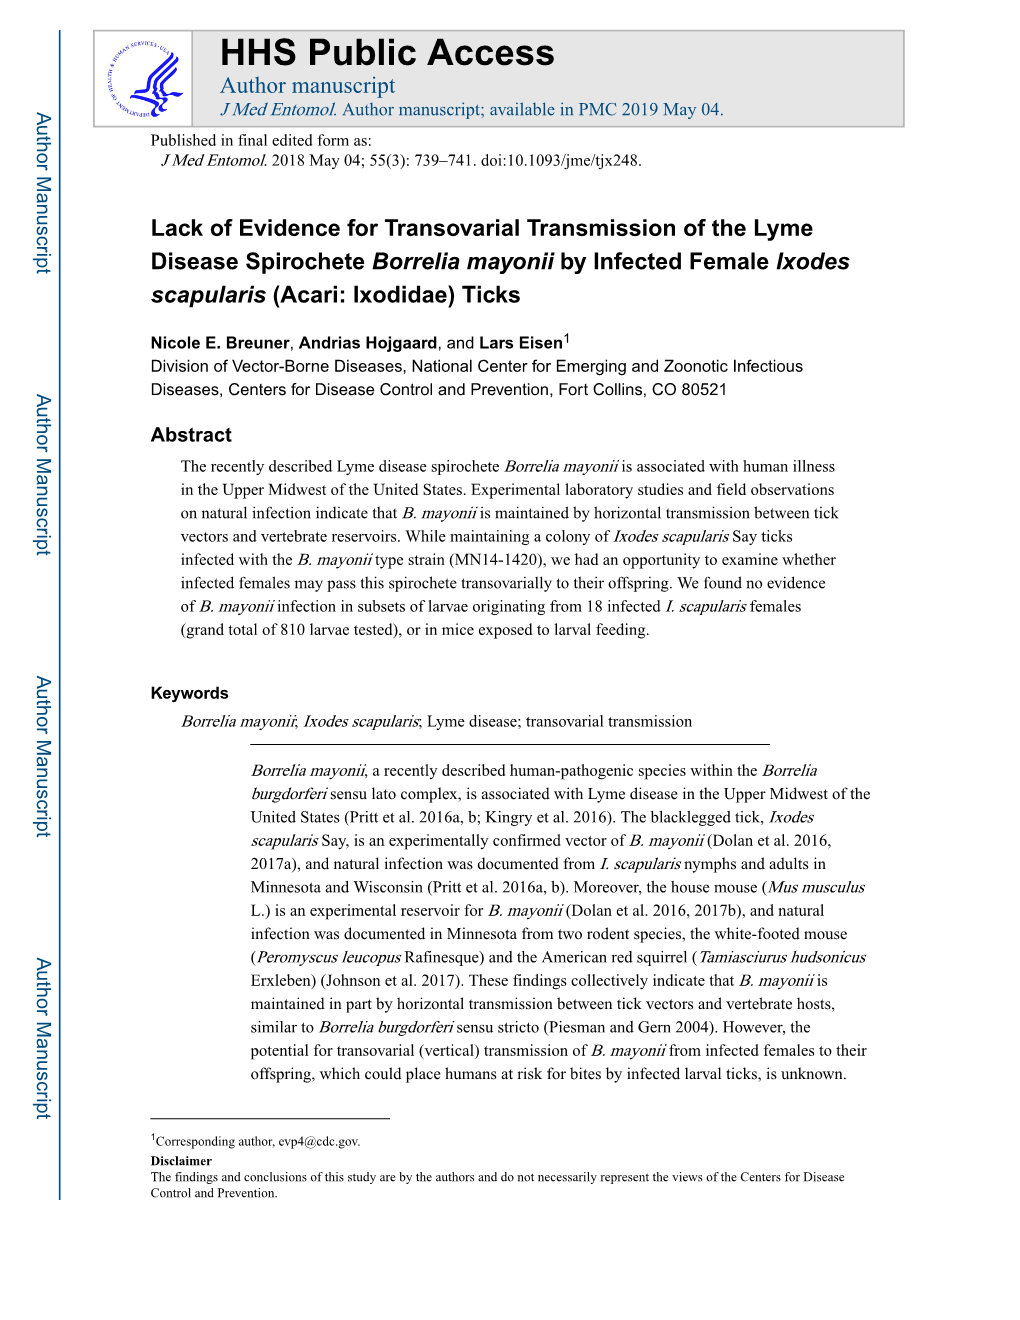 Lack of Evidence for Transovarial Transmission of the Lyme Disease Spirochete Borrelia Mayonii by Infected Female Ixodes Scapularis (Acari: Ixodidae) Ticks